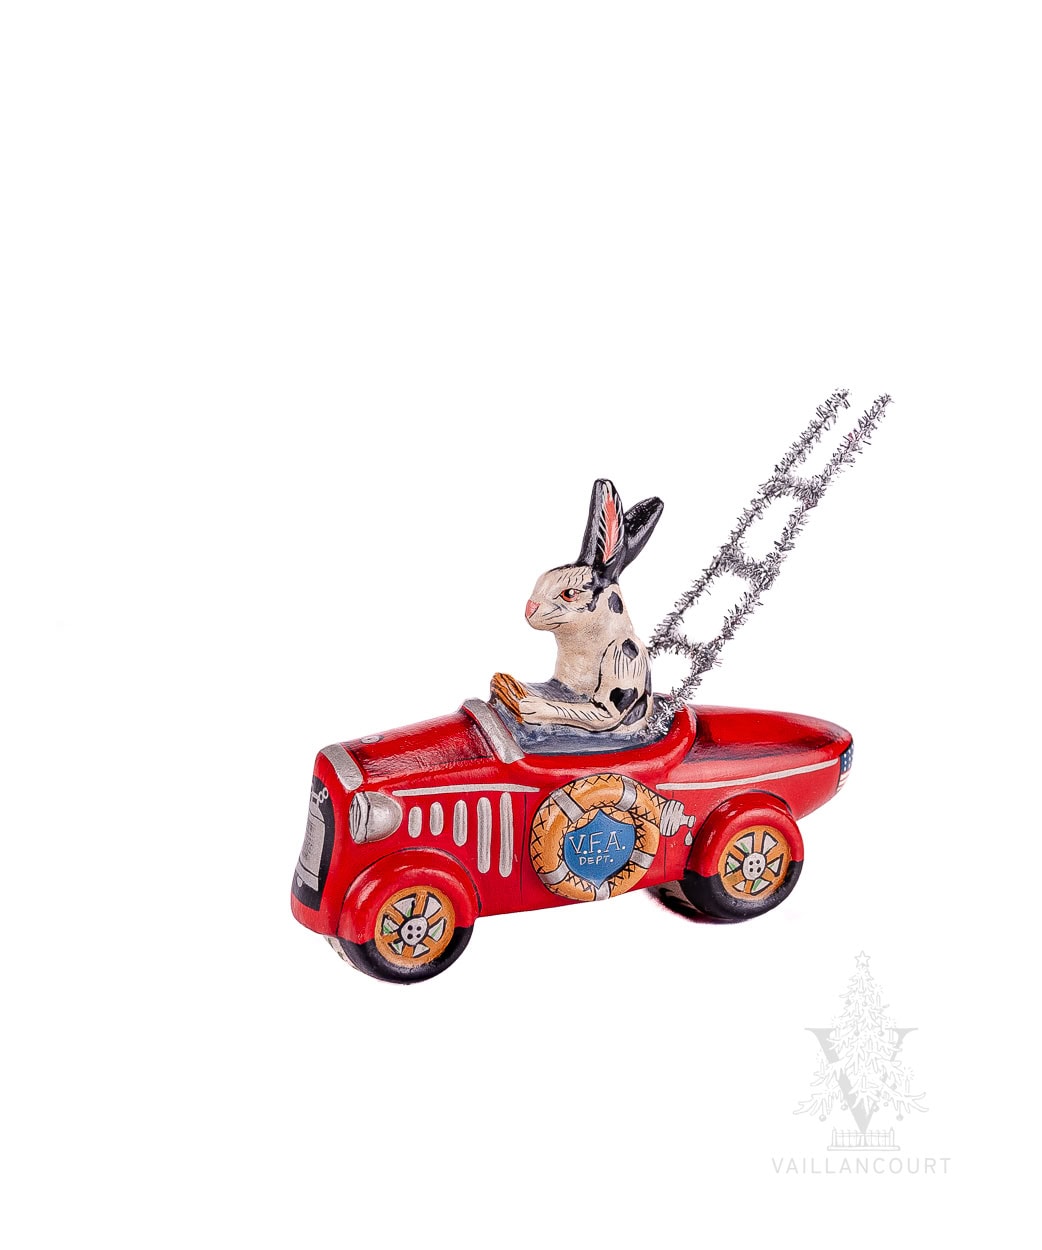 Parade Rabbit Driving Firetruck from Vaillancourt